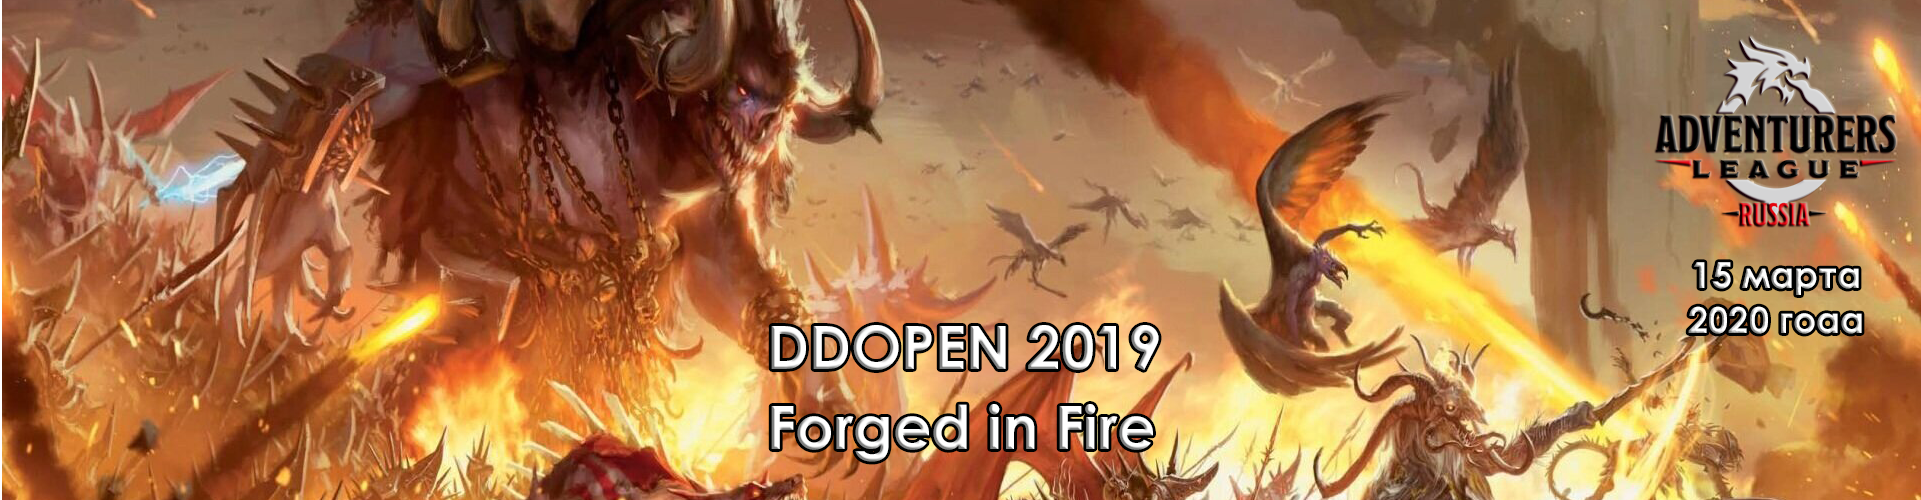 DDOPEN2019: Forged in Fire